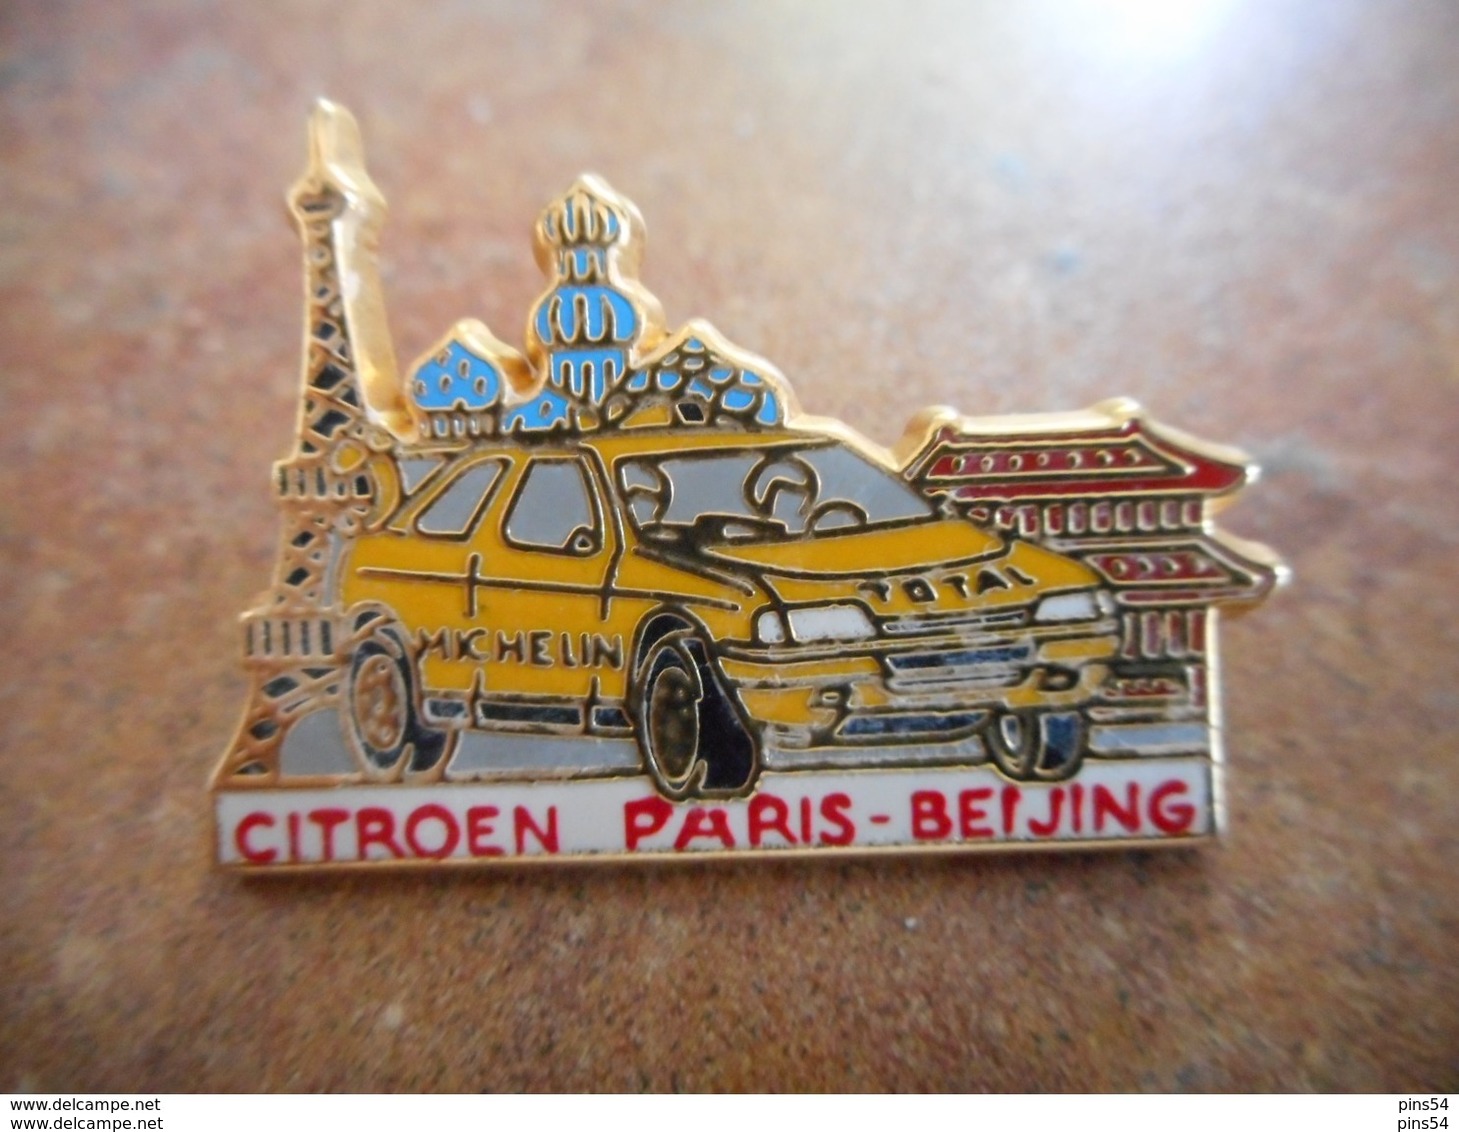 A010 -- Pin's Citroen Paris Beijing - Citroën